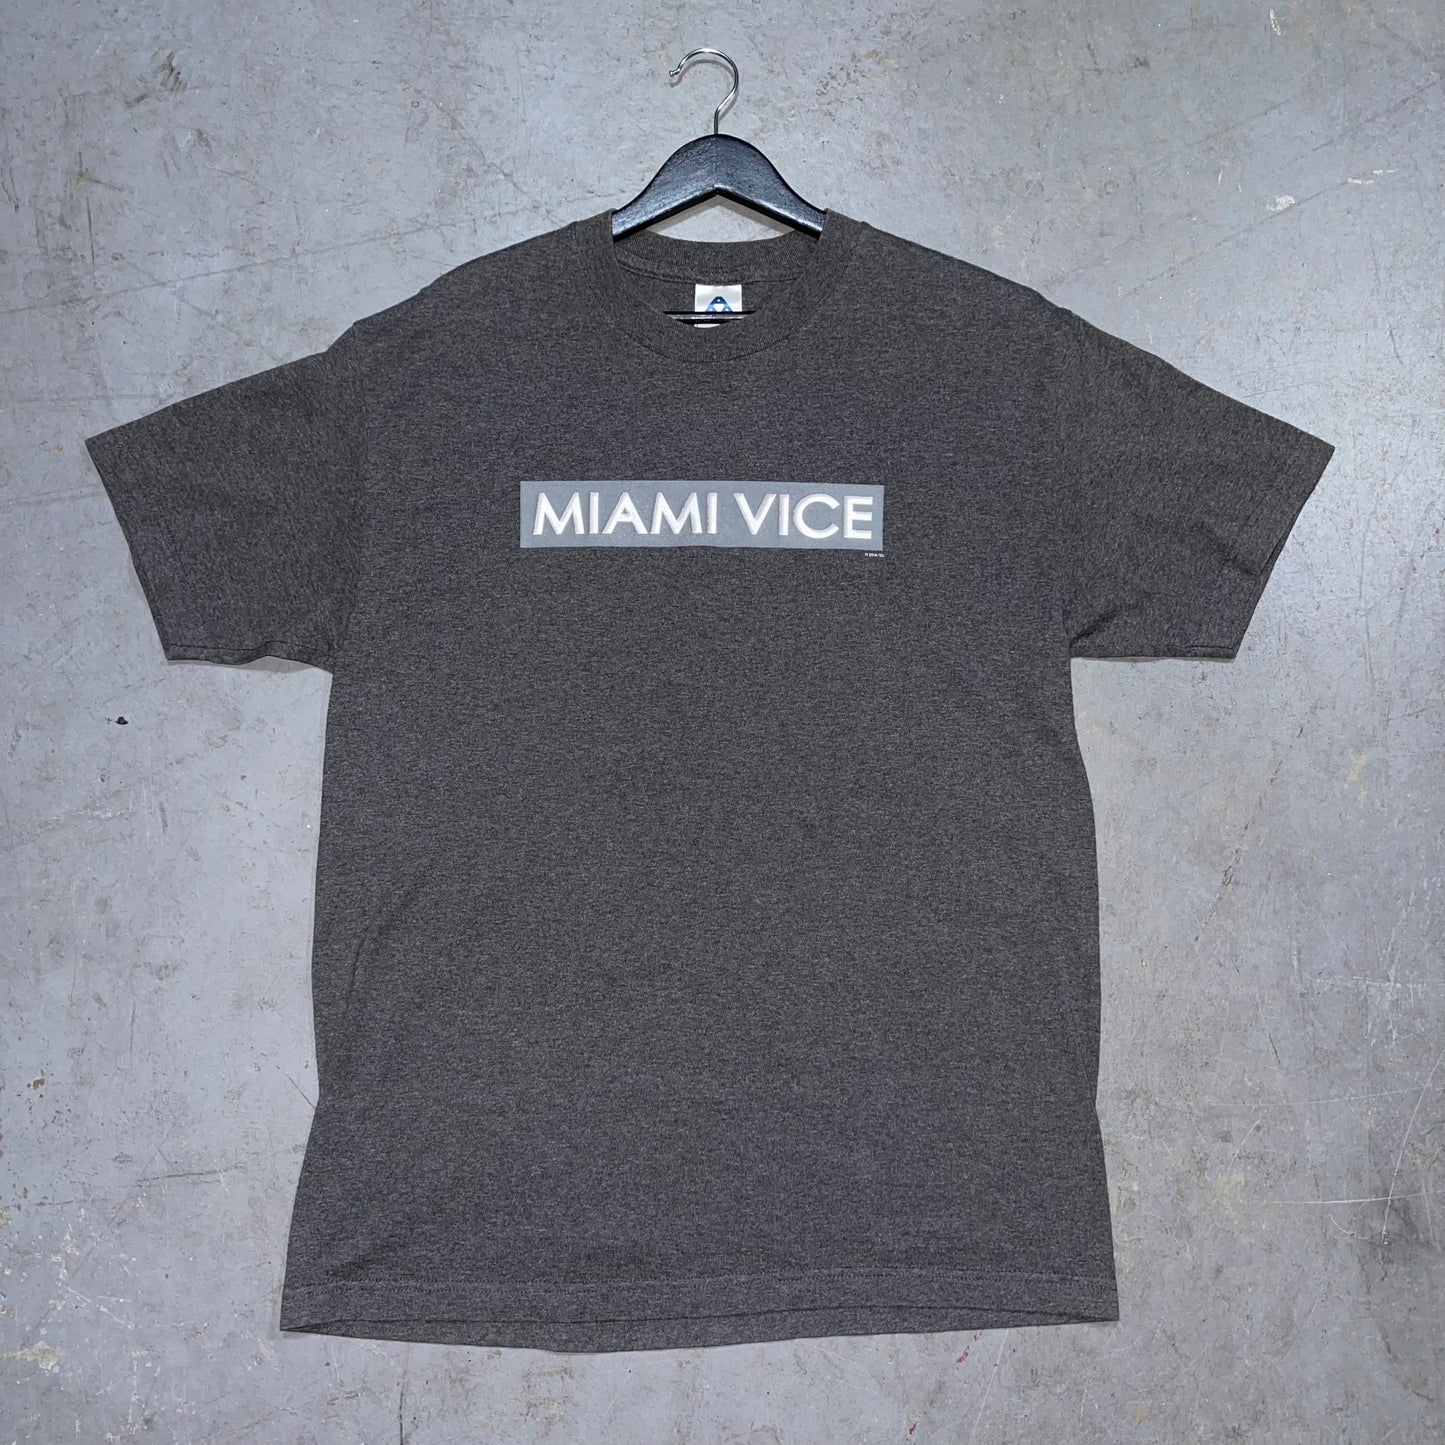 2006 Miami Vice T-Shirt. Size Large